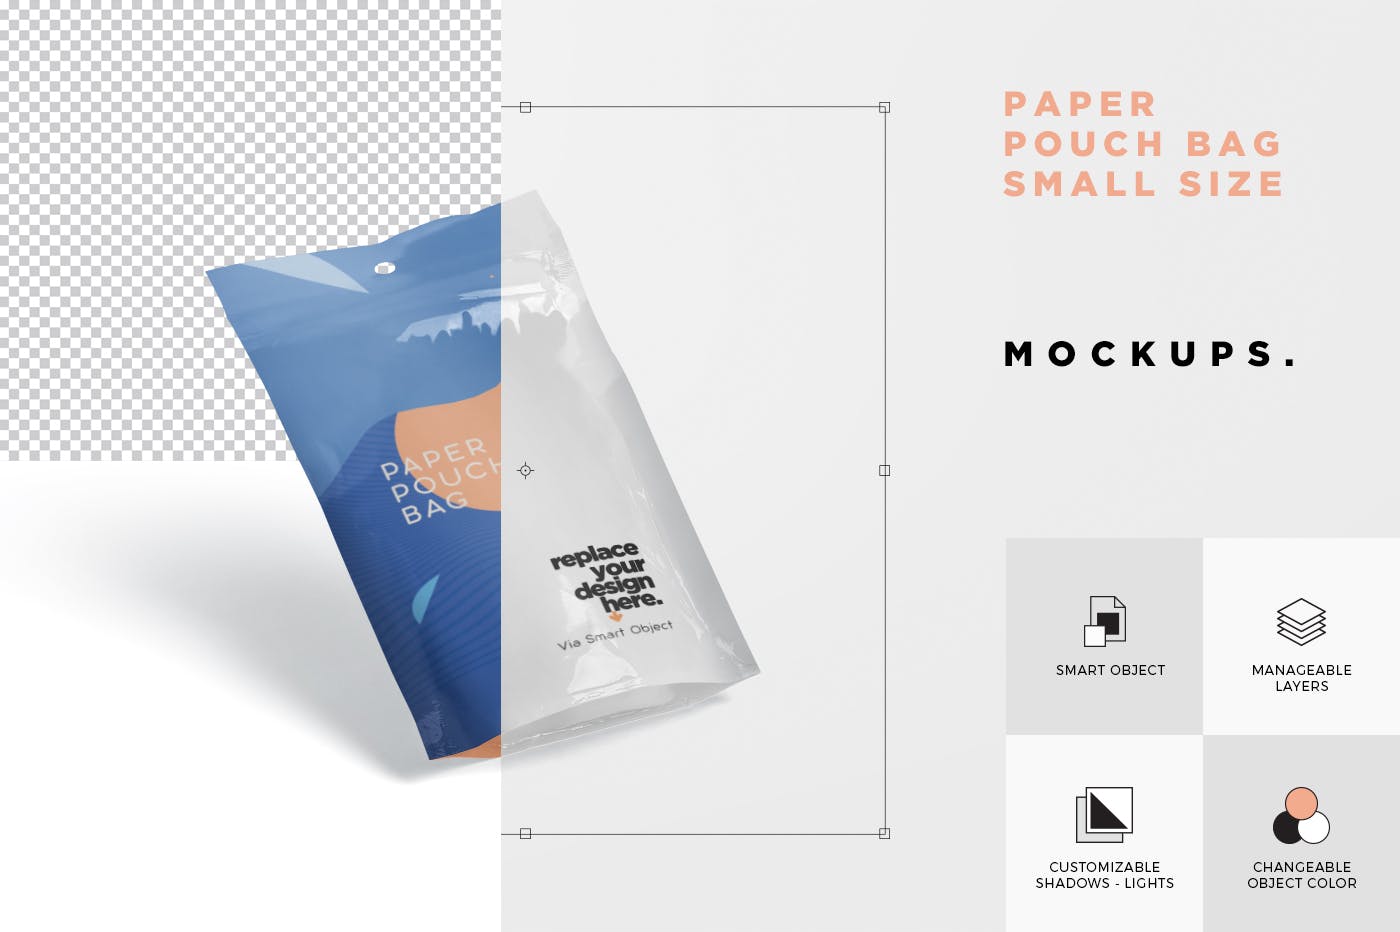 小尺寸零食包装纸袋设计图样机 Paper Pouch Bag Mockup in Small Size插图(5)